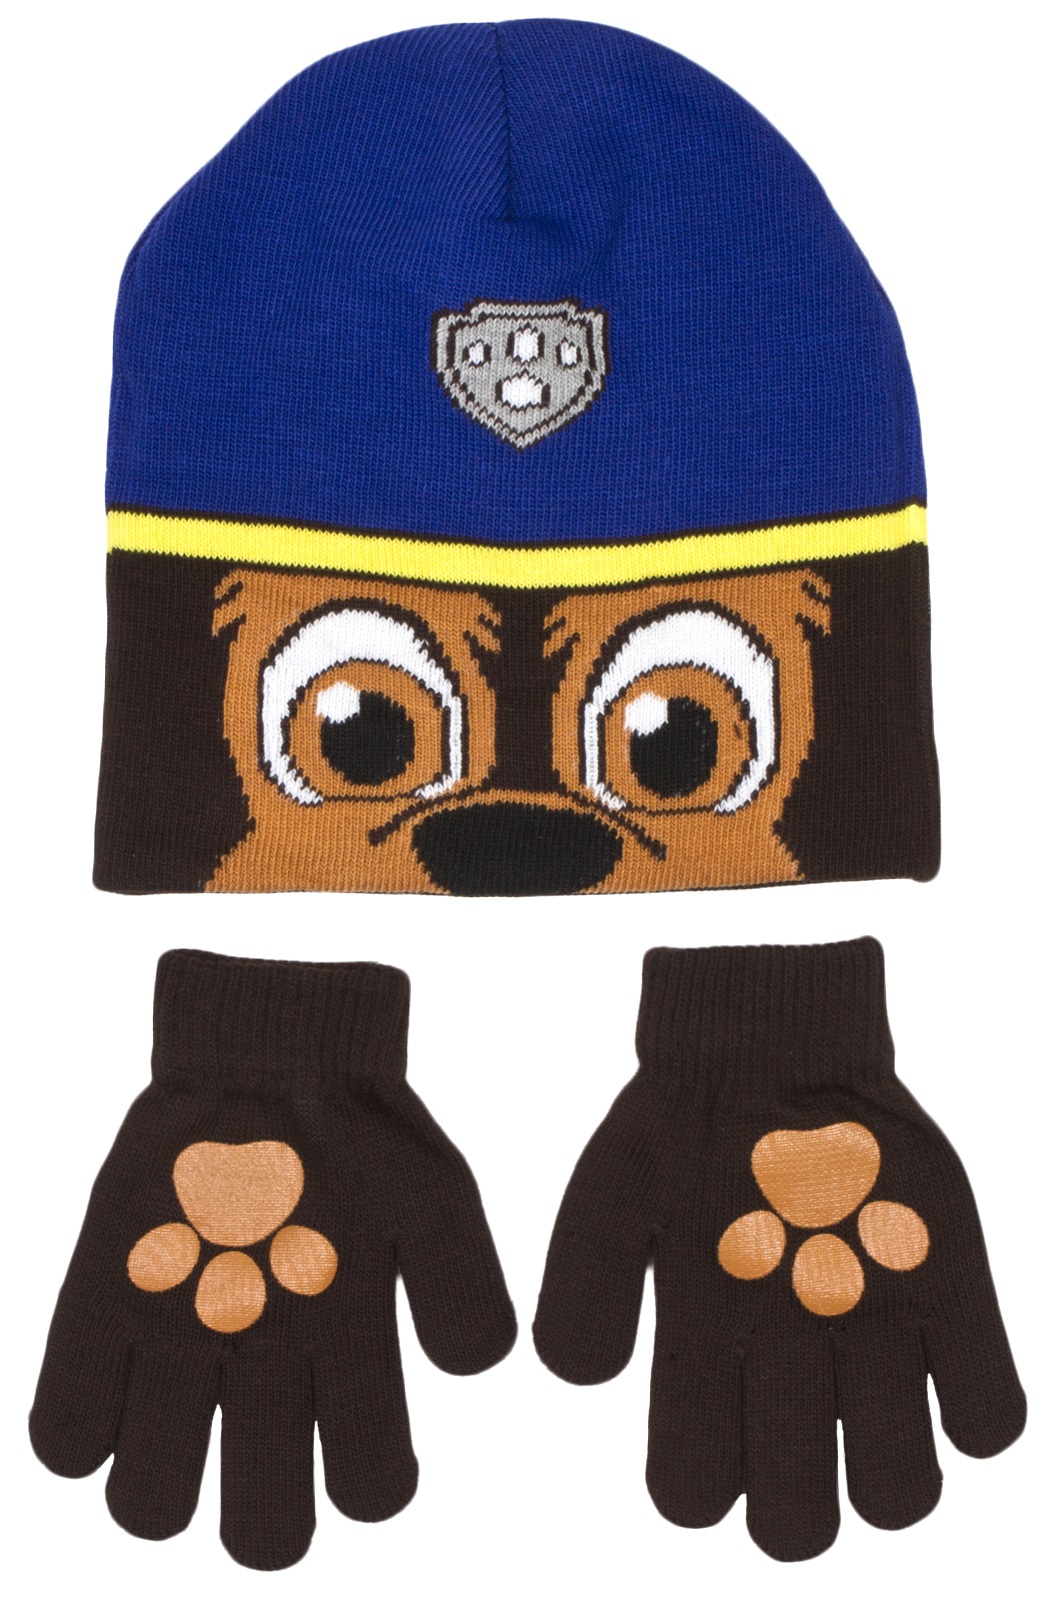 Paw Patrol Boys 'Chase' 2 Piece Winter Set Hat & Glove One Size Kids Accessories